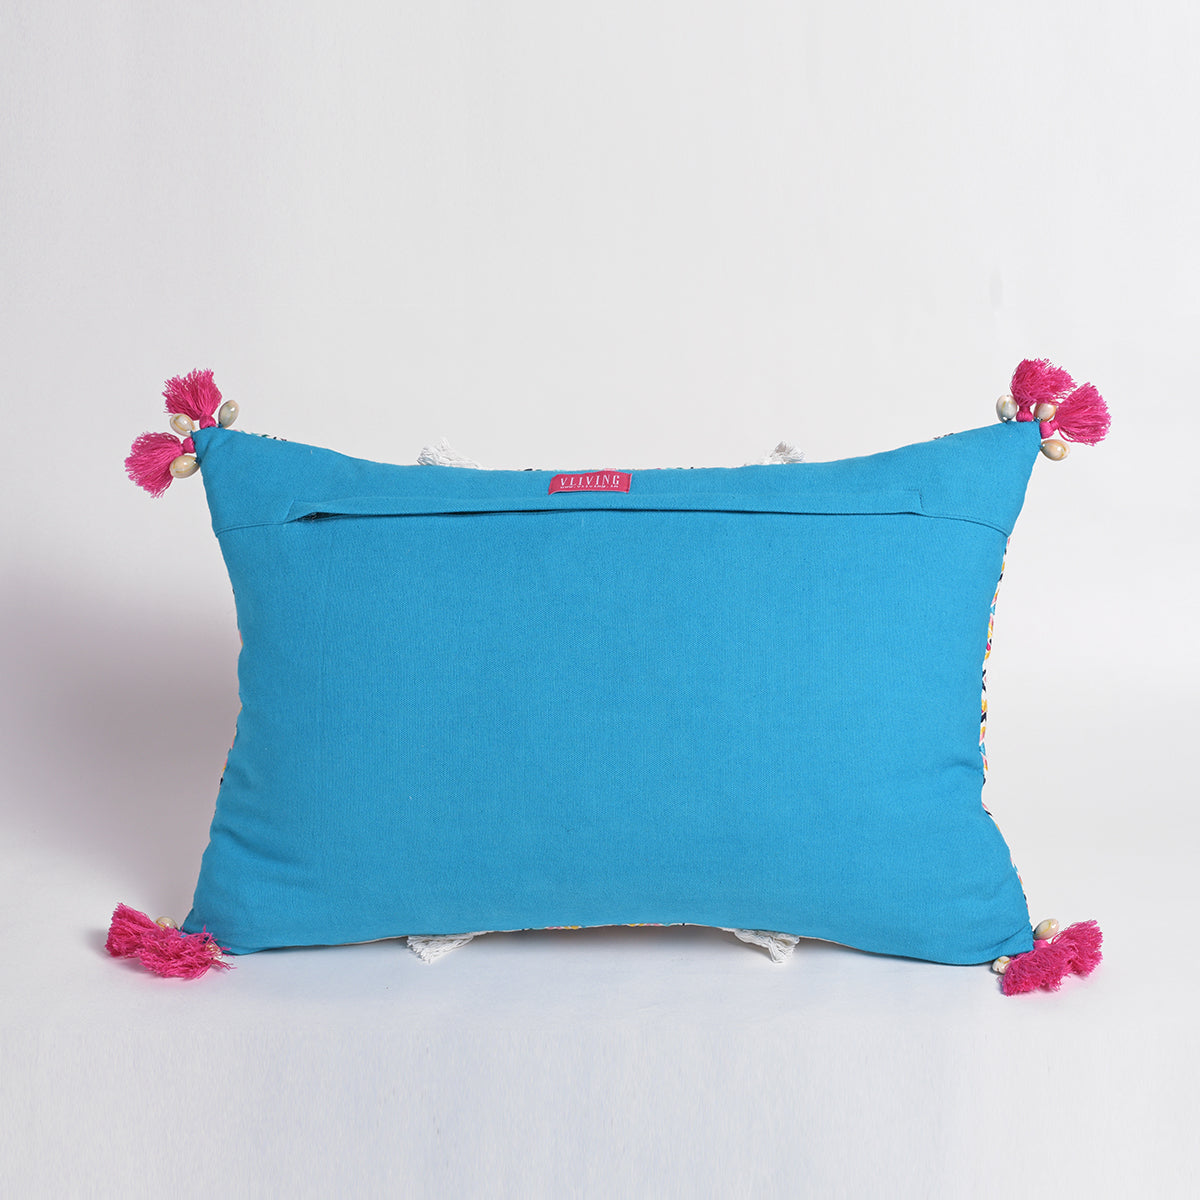 Banjara – Embroidered, multicolored, Peruvian cushion cover